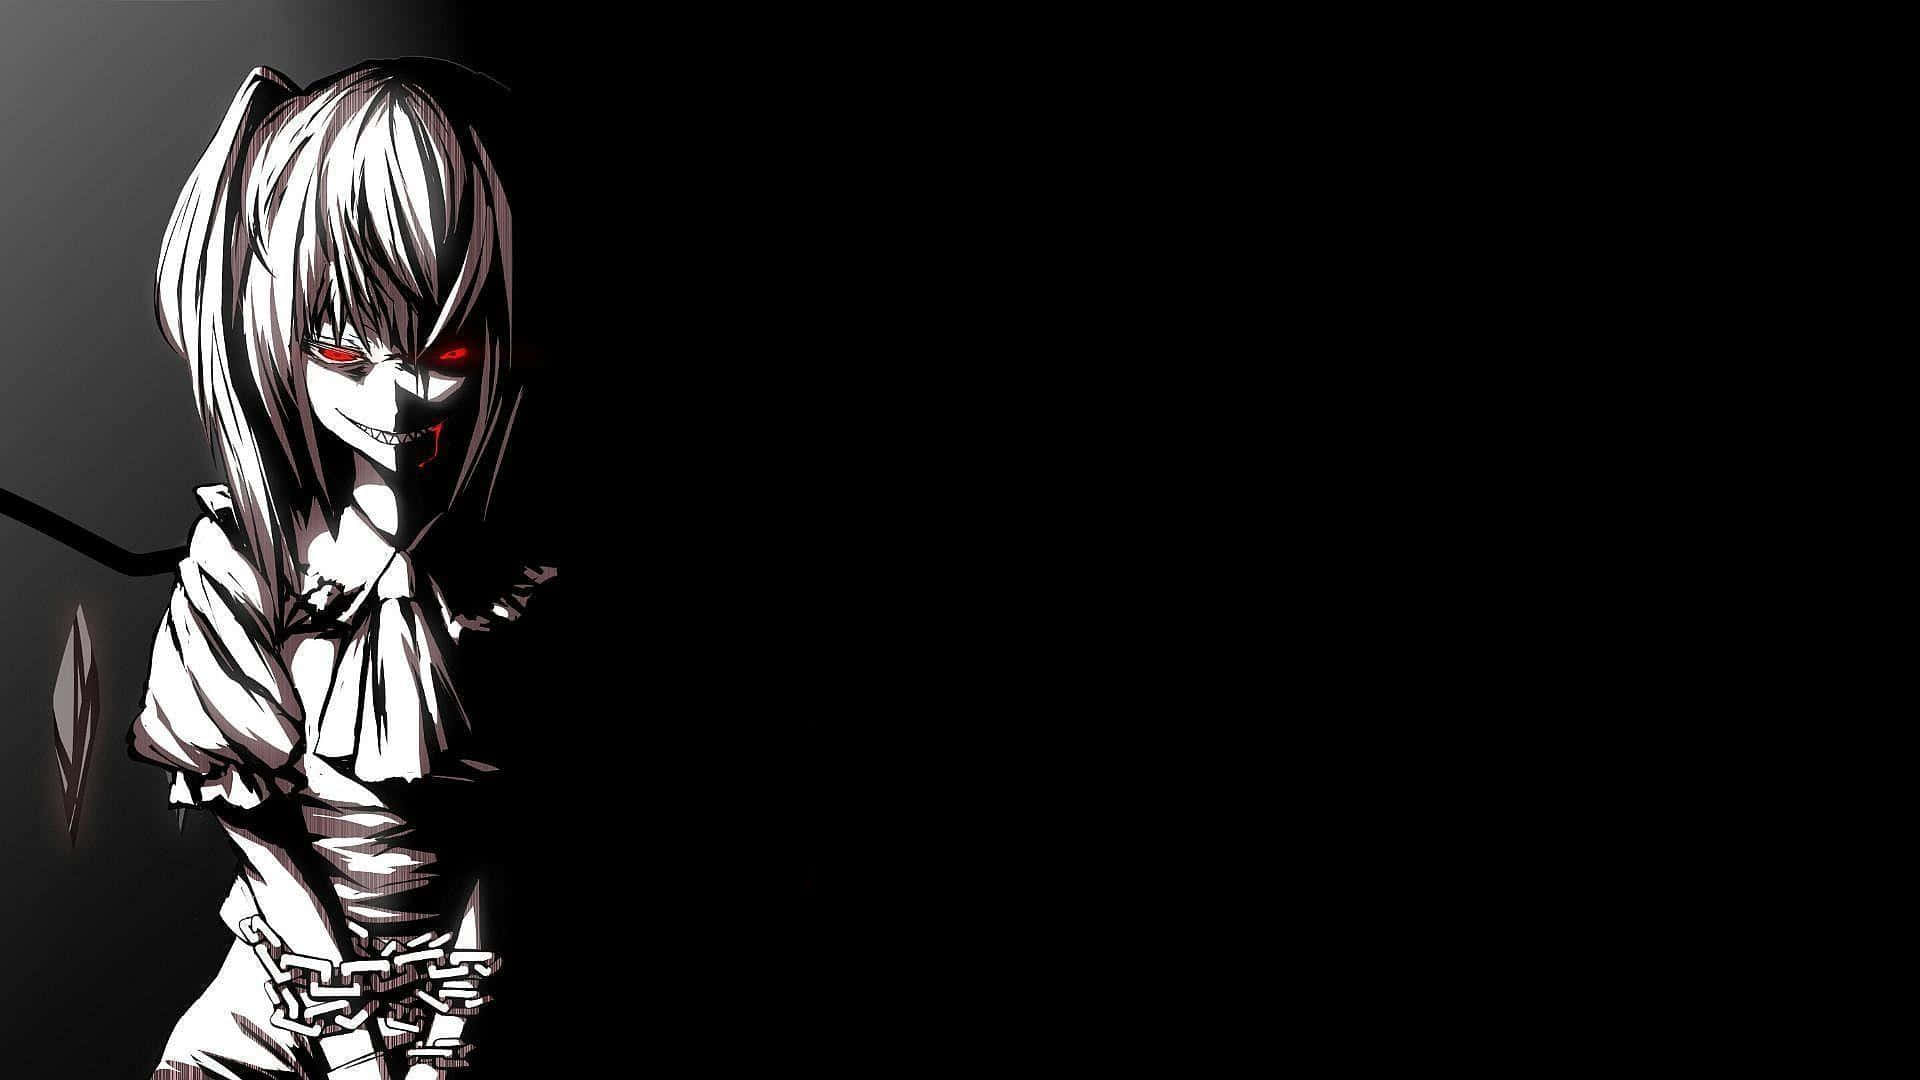 Anime Character with Piercing Gaze - dark aesthetic anime pfp